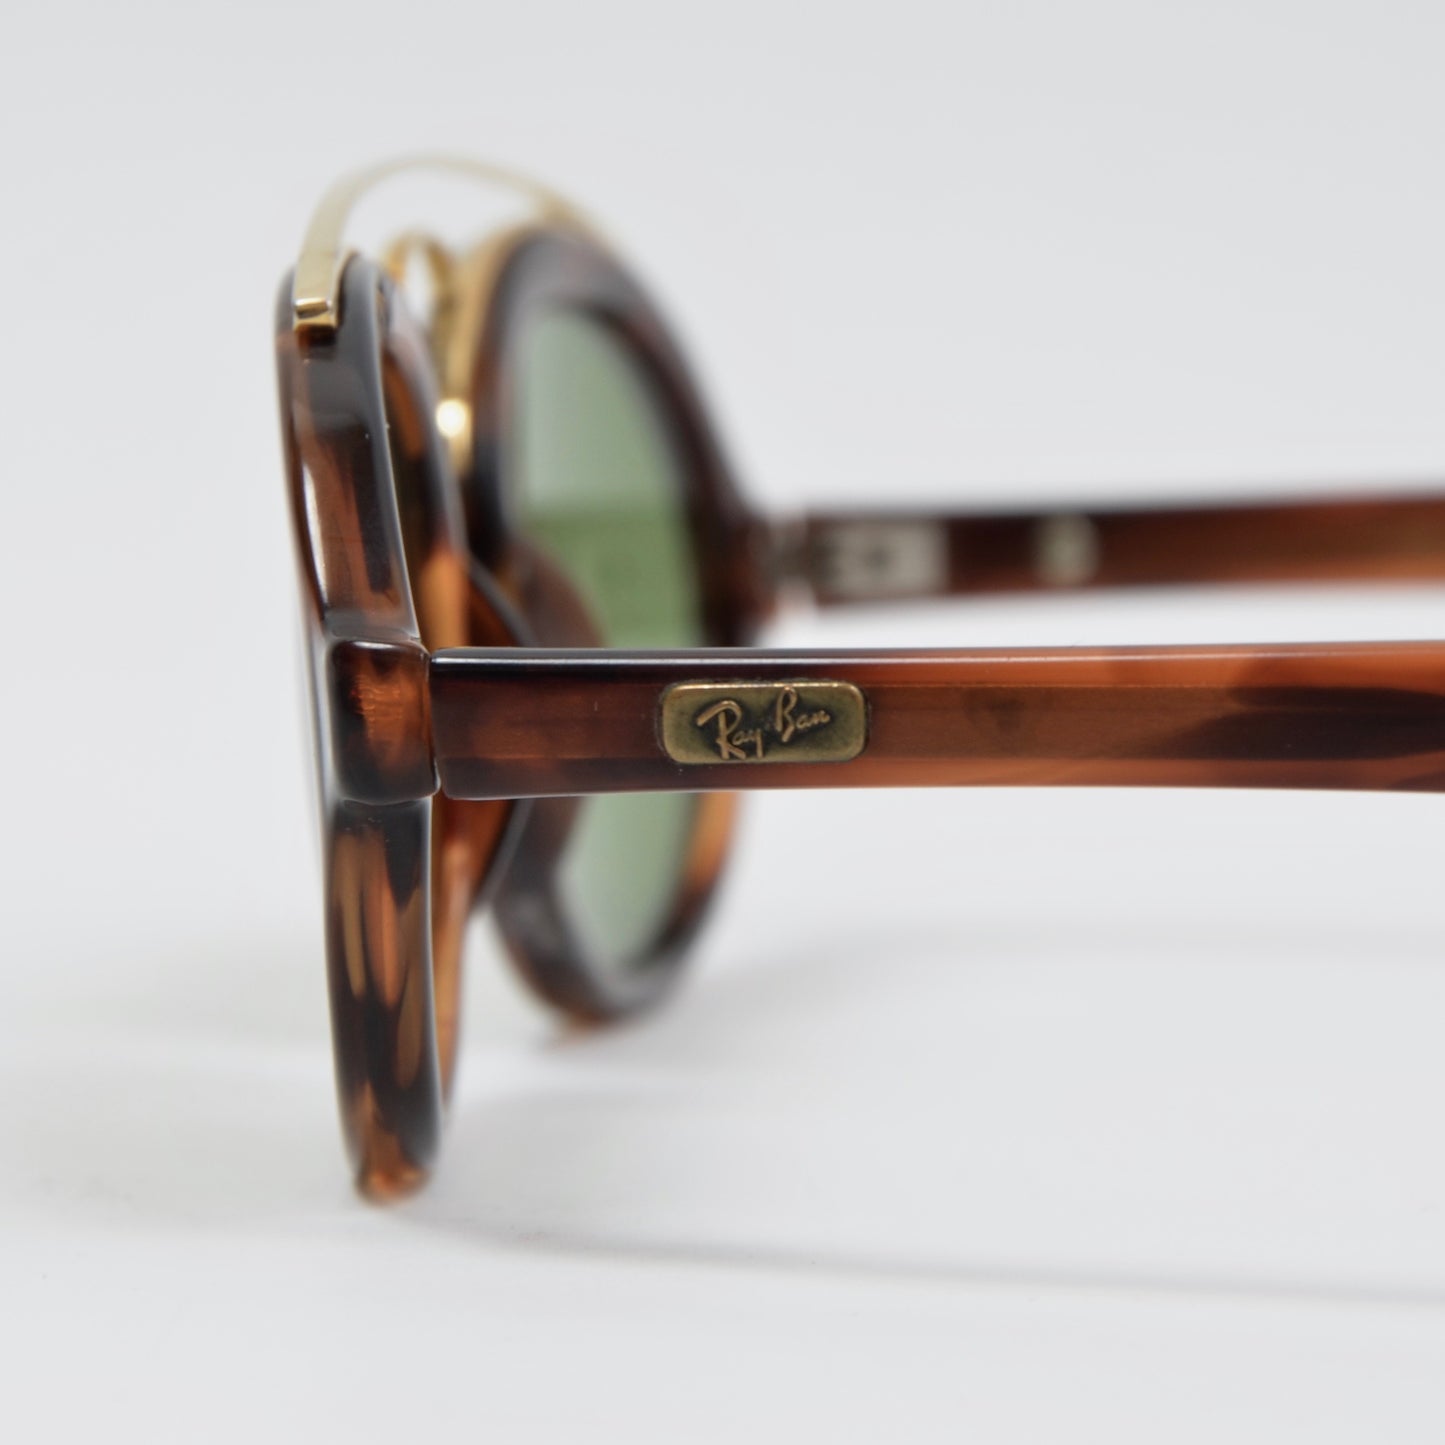 Bausch & Lomb Ray-Ban Gatsby Style 6 Sunglasses - Tortoise & Gold